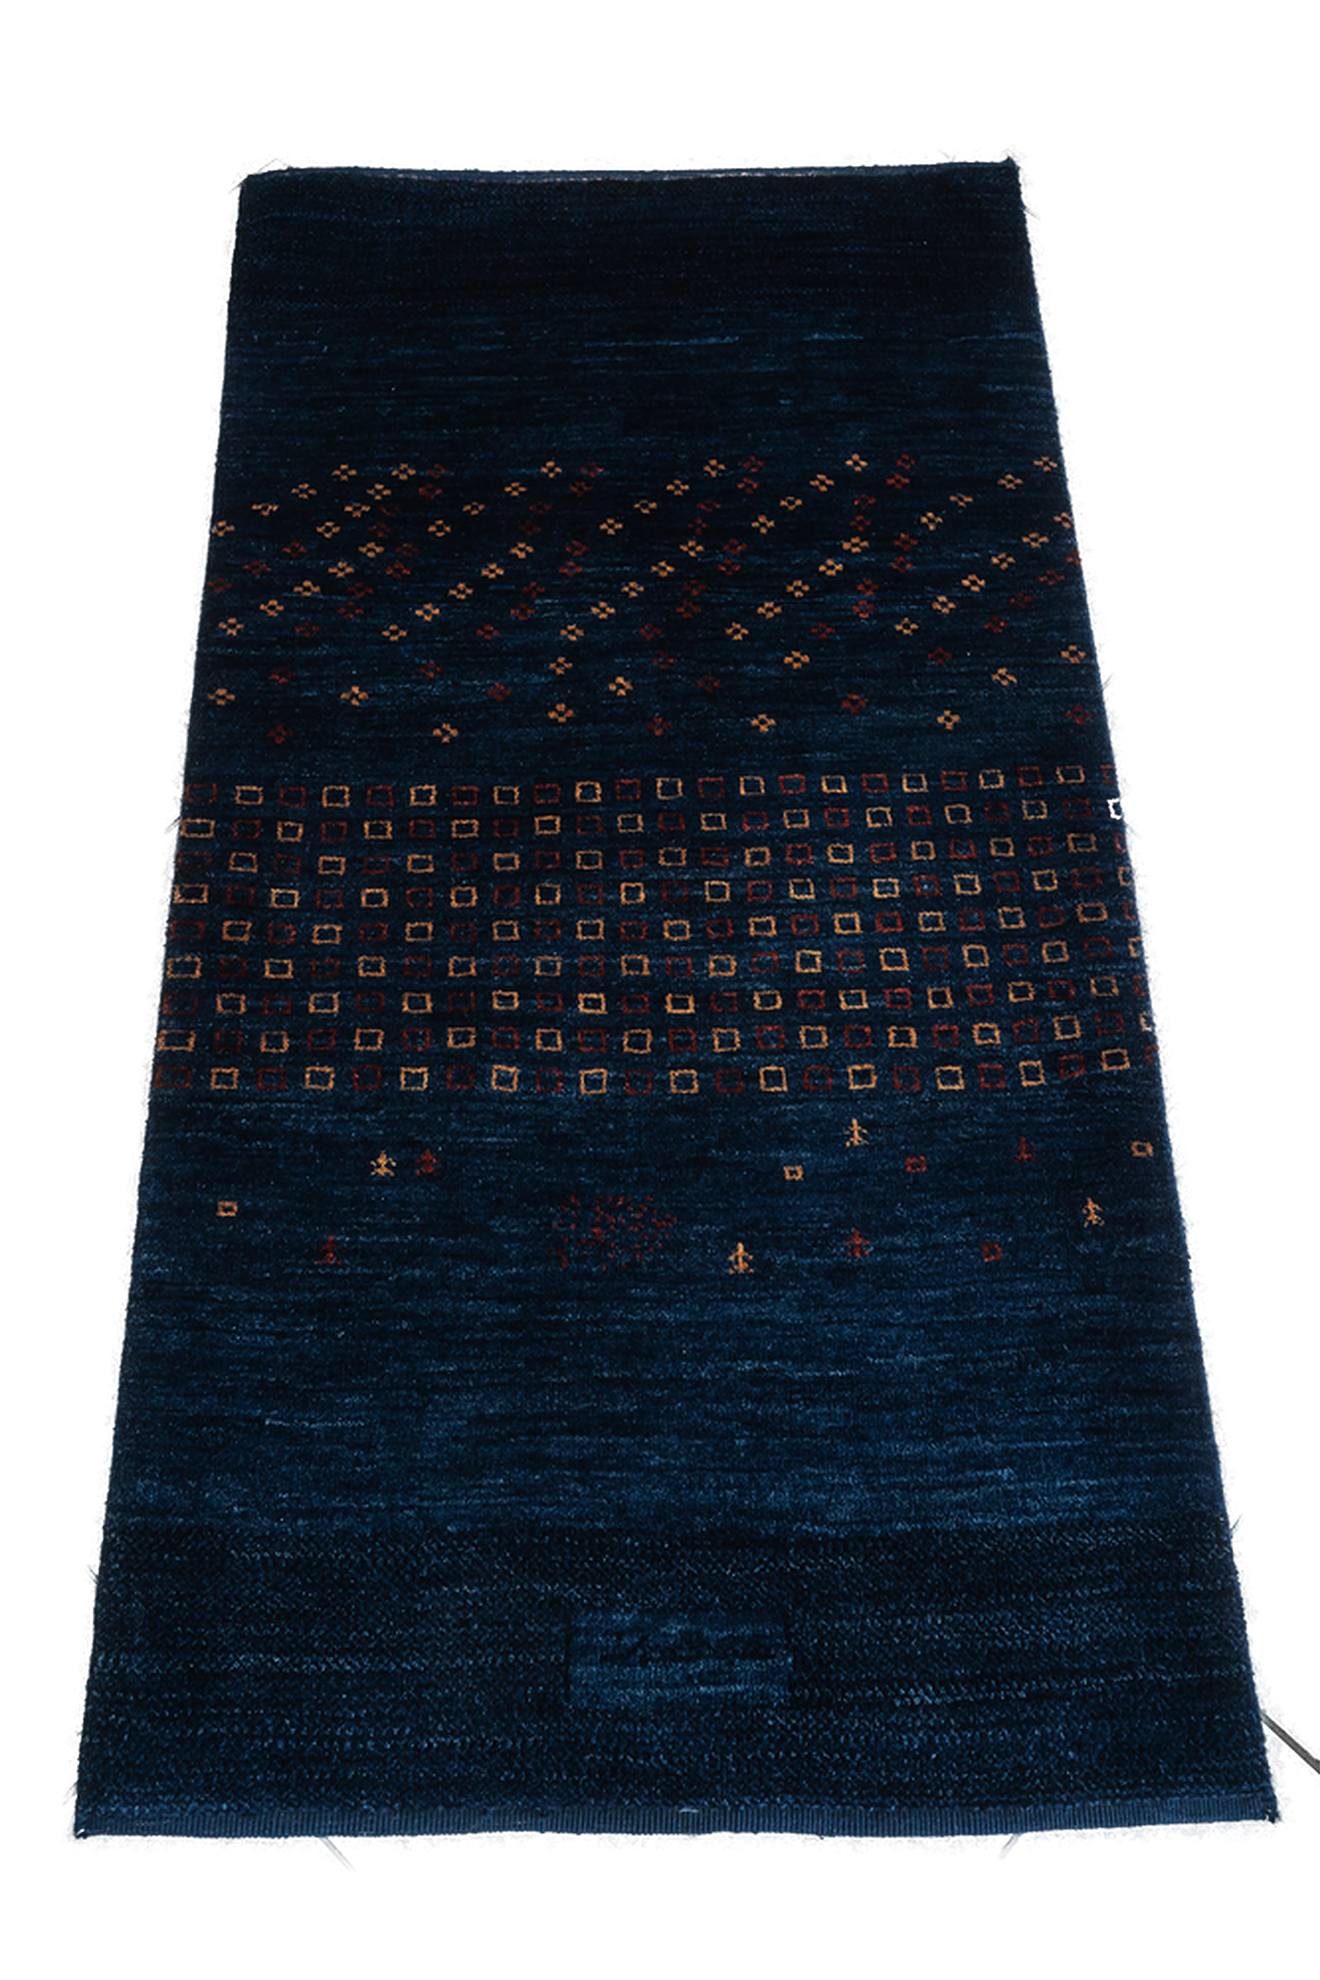 Persian Carpet "Kashkouli " 146 x 80 cm - Farhadian.com